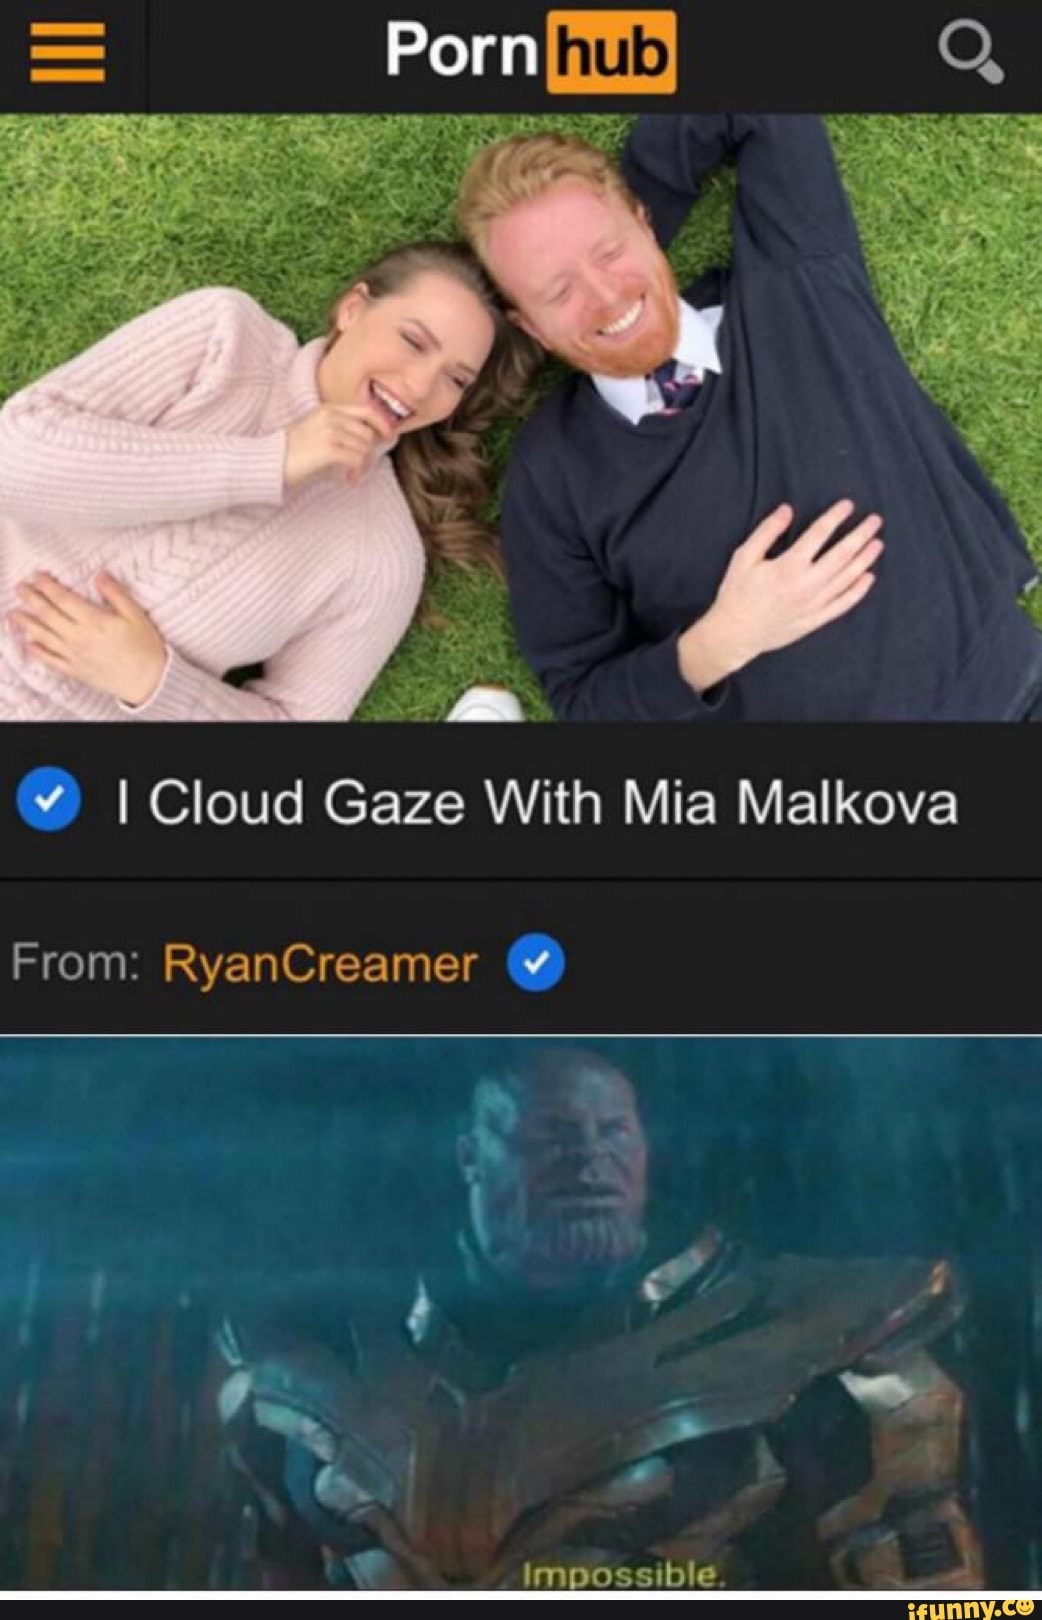 Âº I Cloud Gaze With Mia Malkova - iFunny Brazil